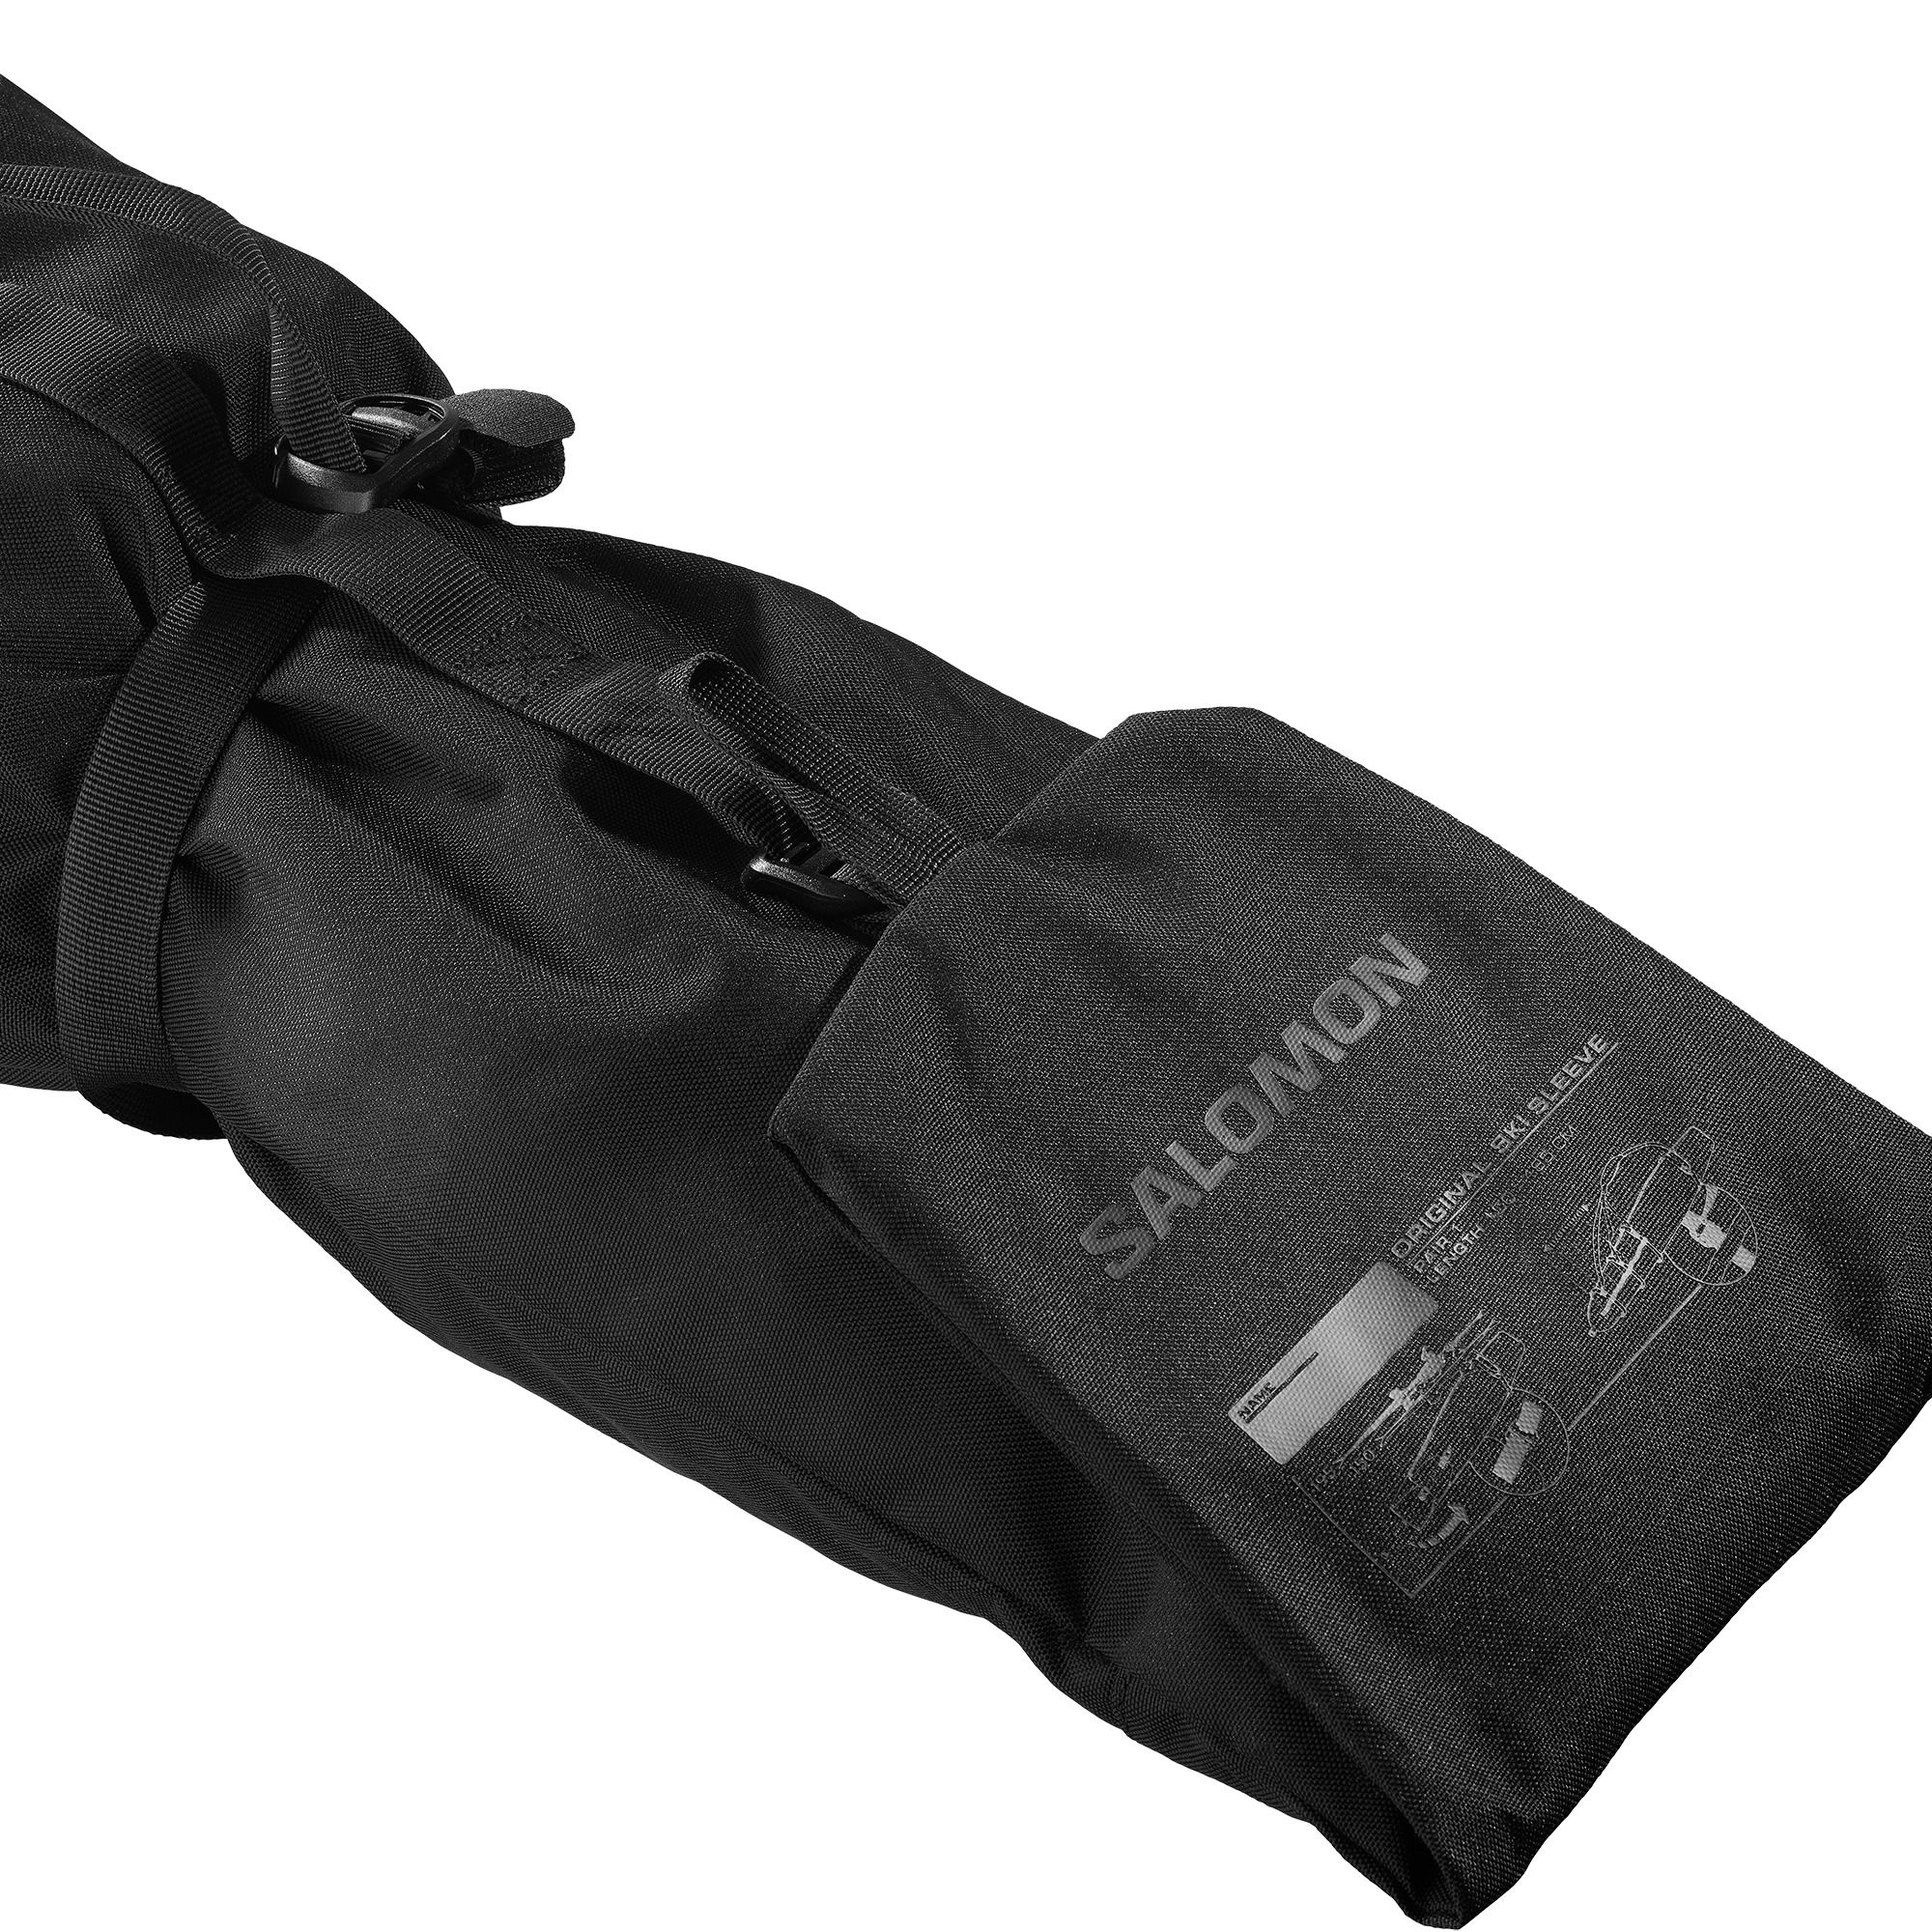 Housse à Ski Ski Bag Original - 1 Paire - 160/210 Cm - Black